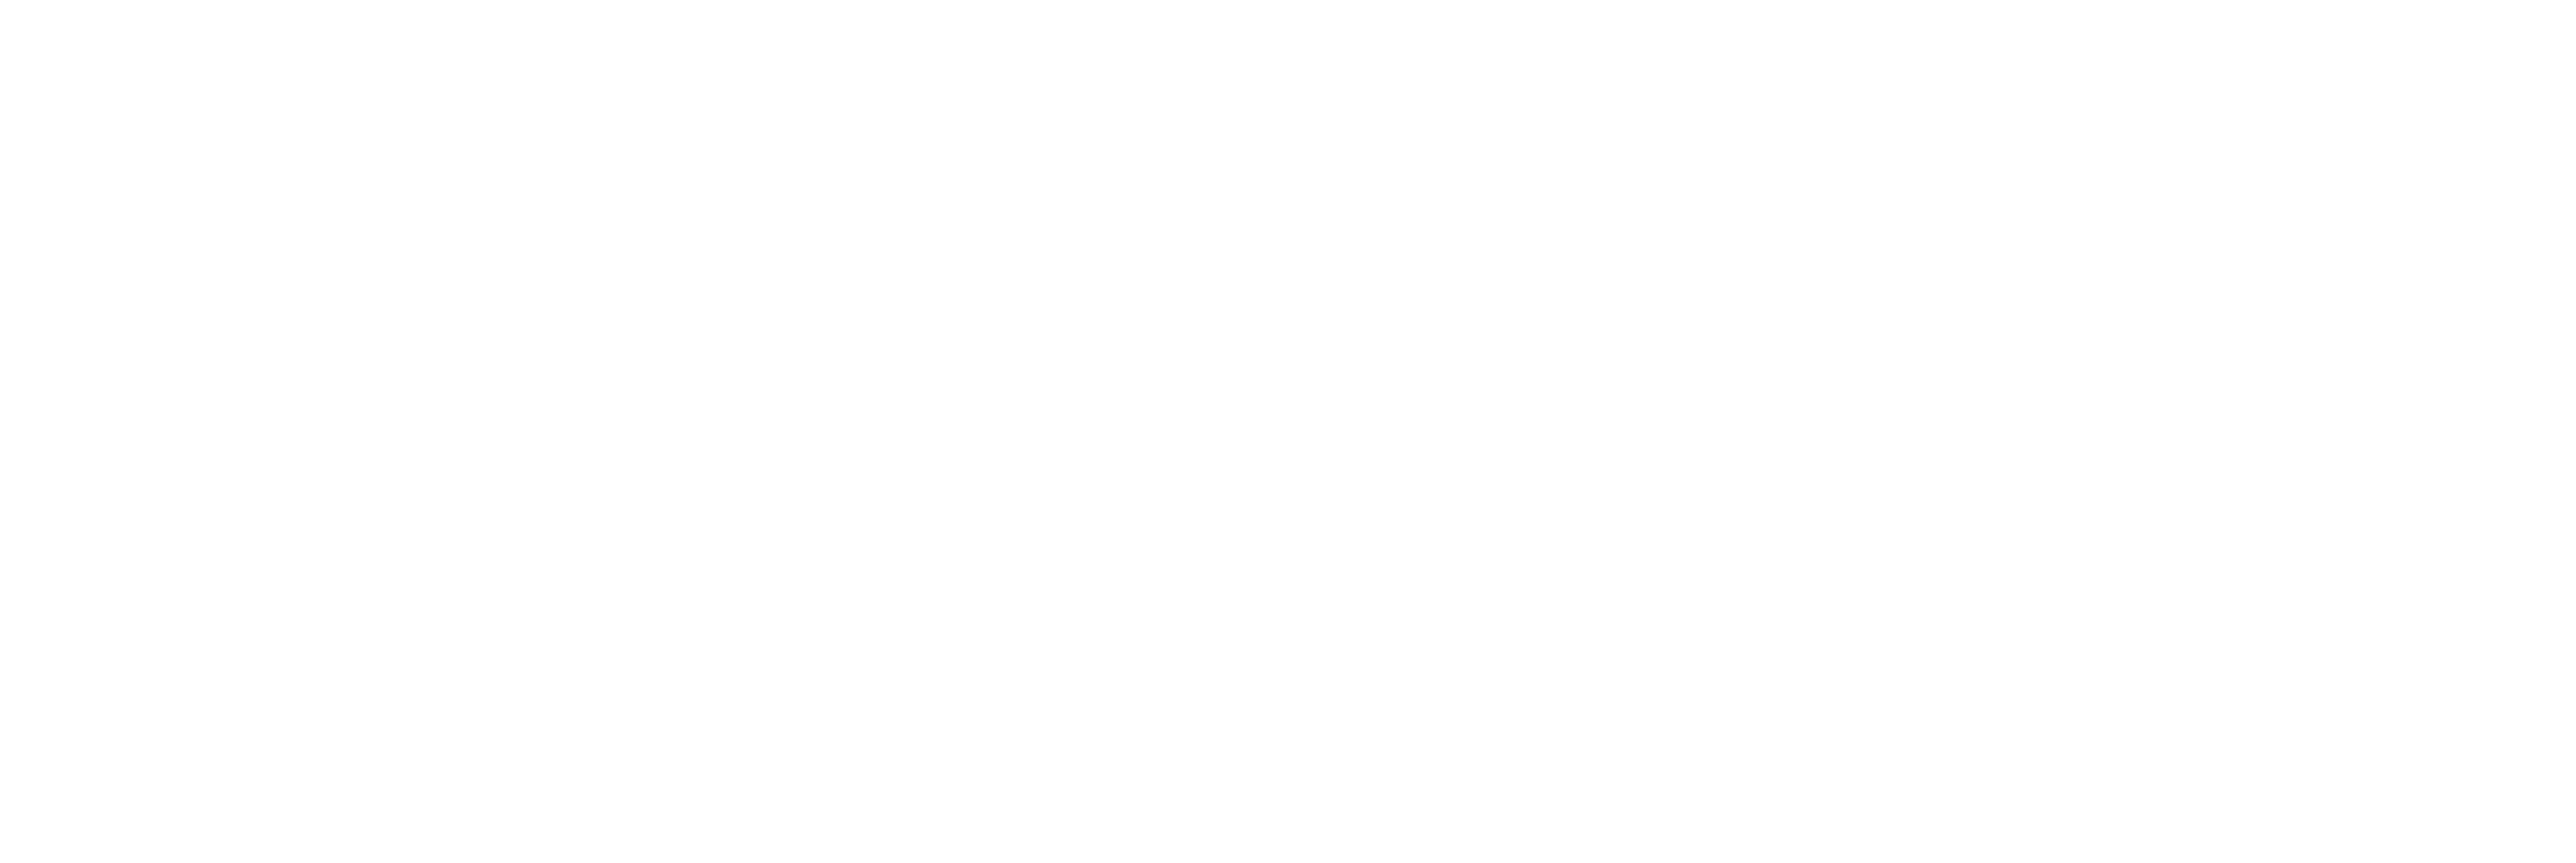 white-logo carlo